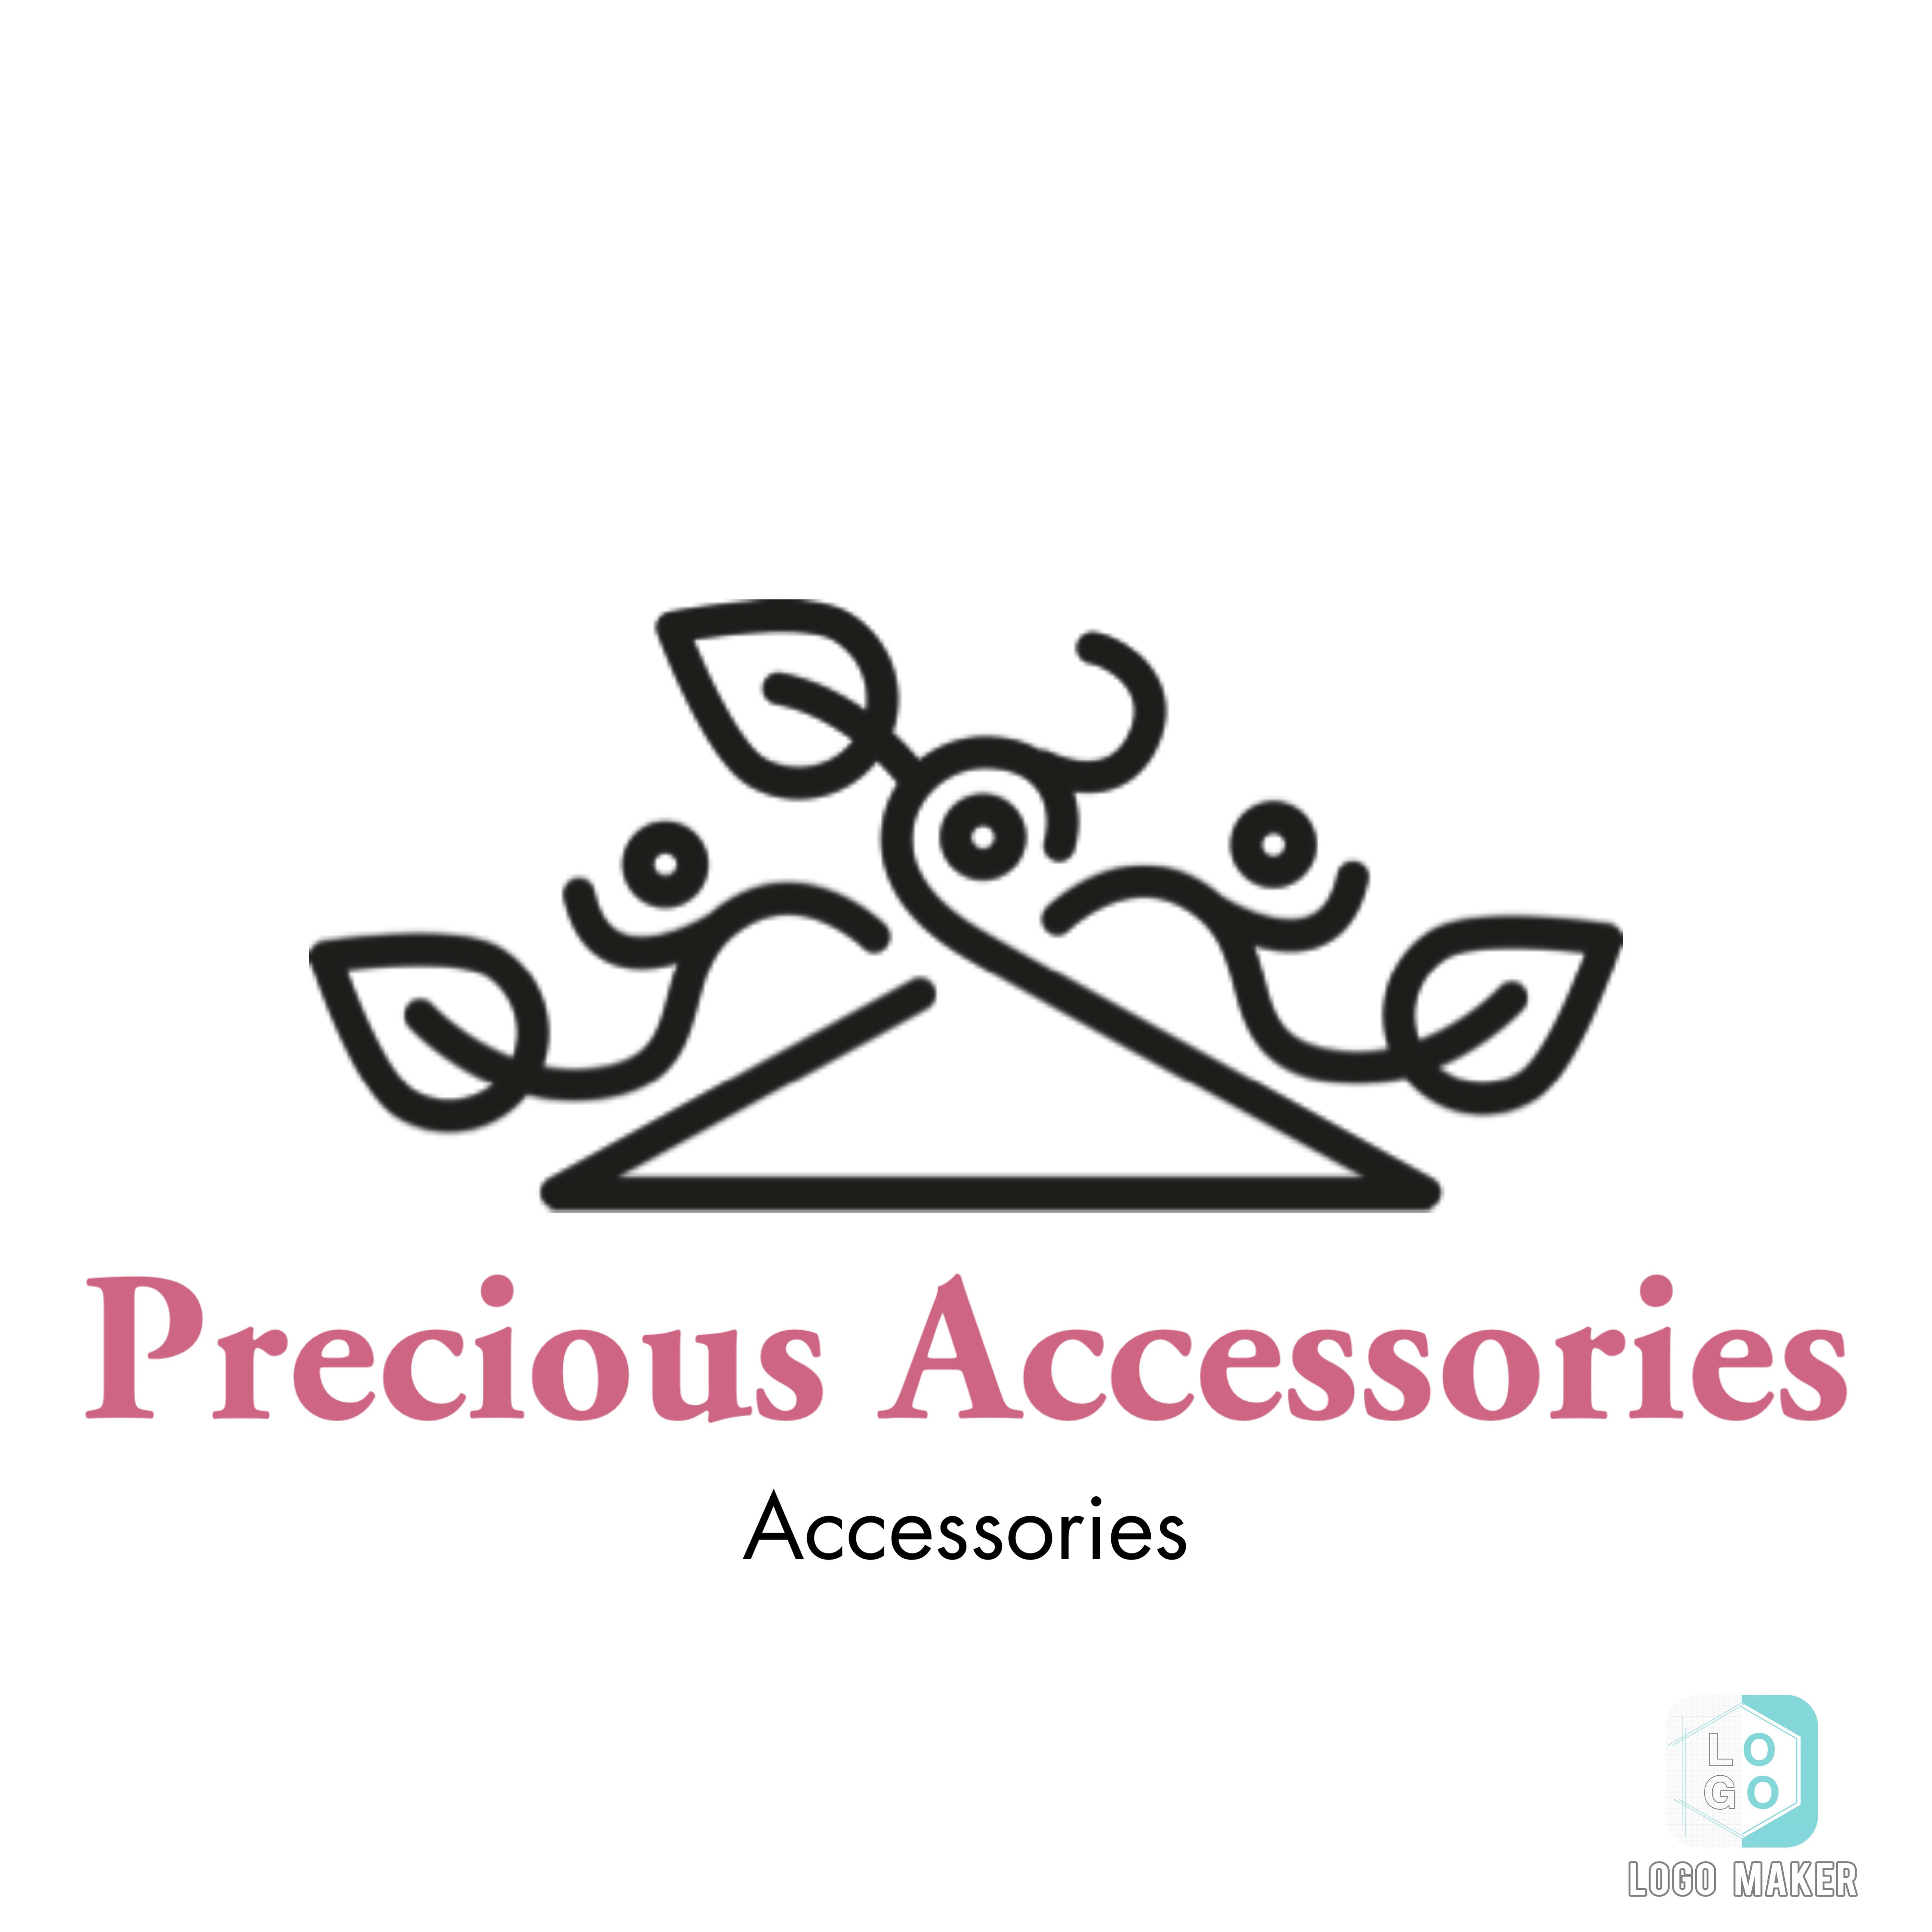 Precious Accessories